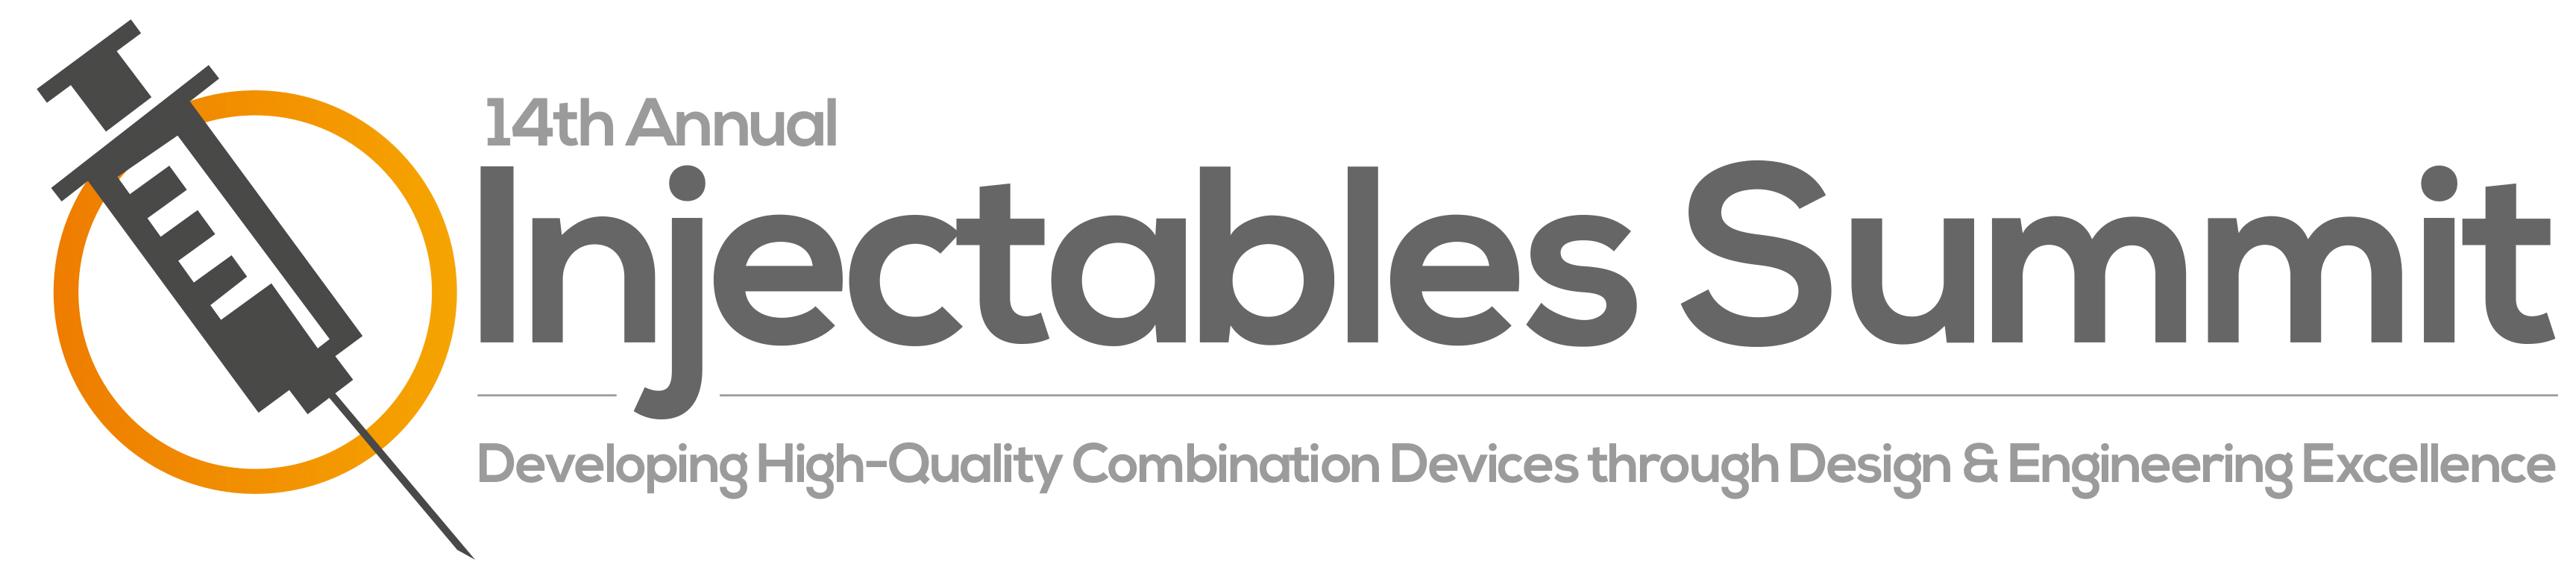 HW240417 14th Injectables Summit logo TAG (1)-1